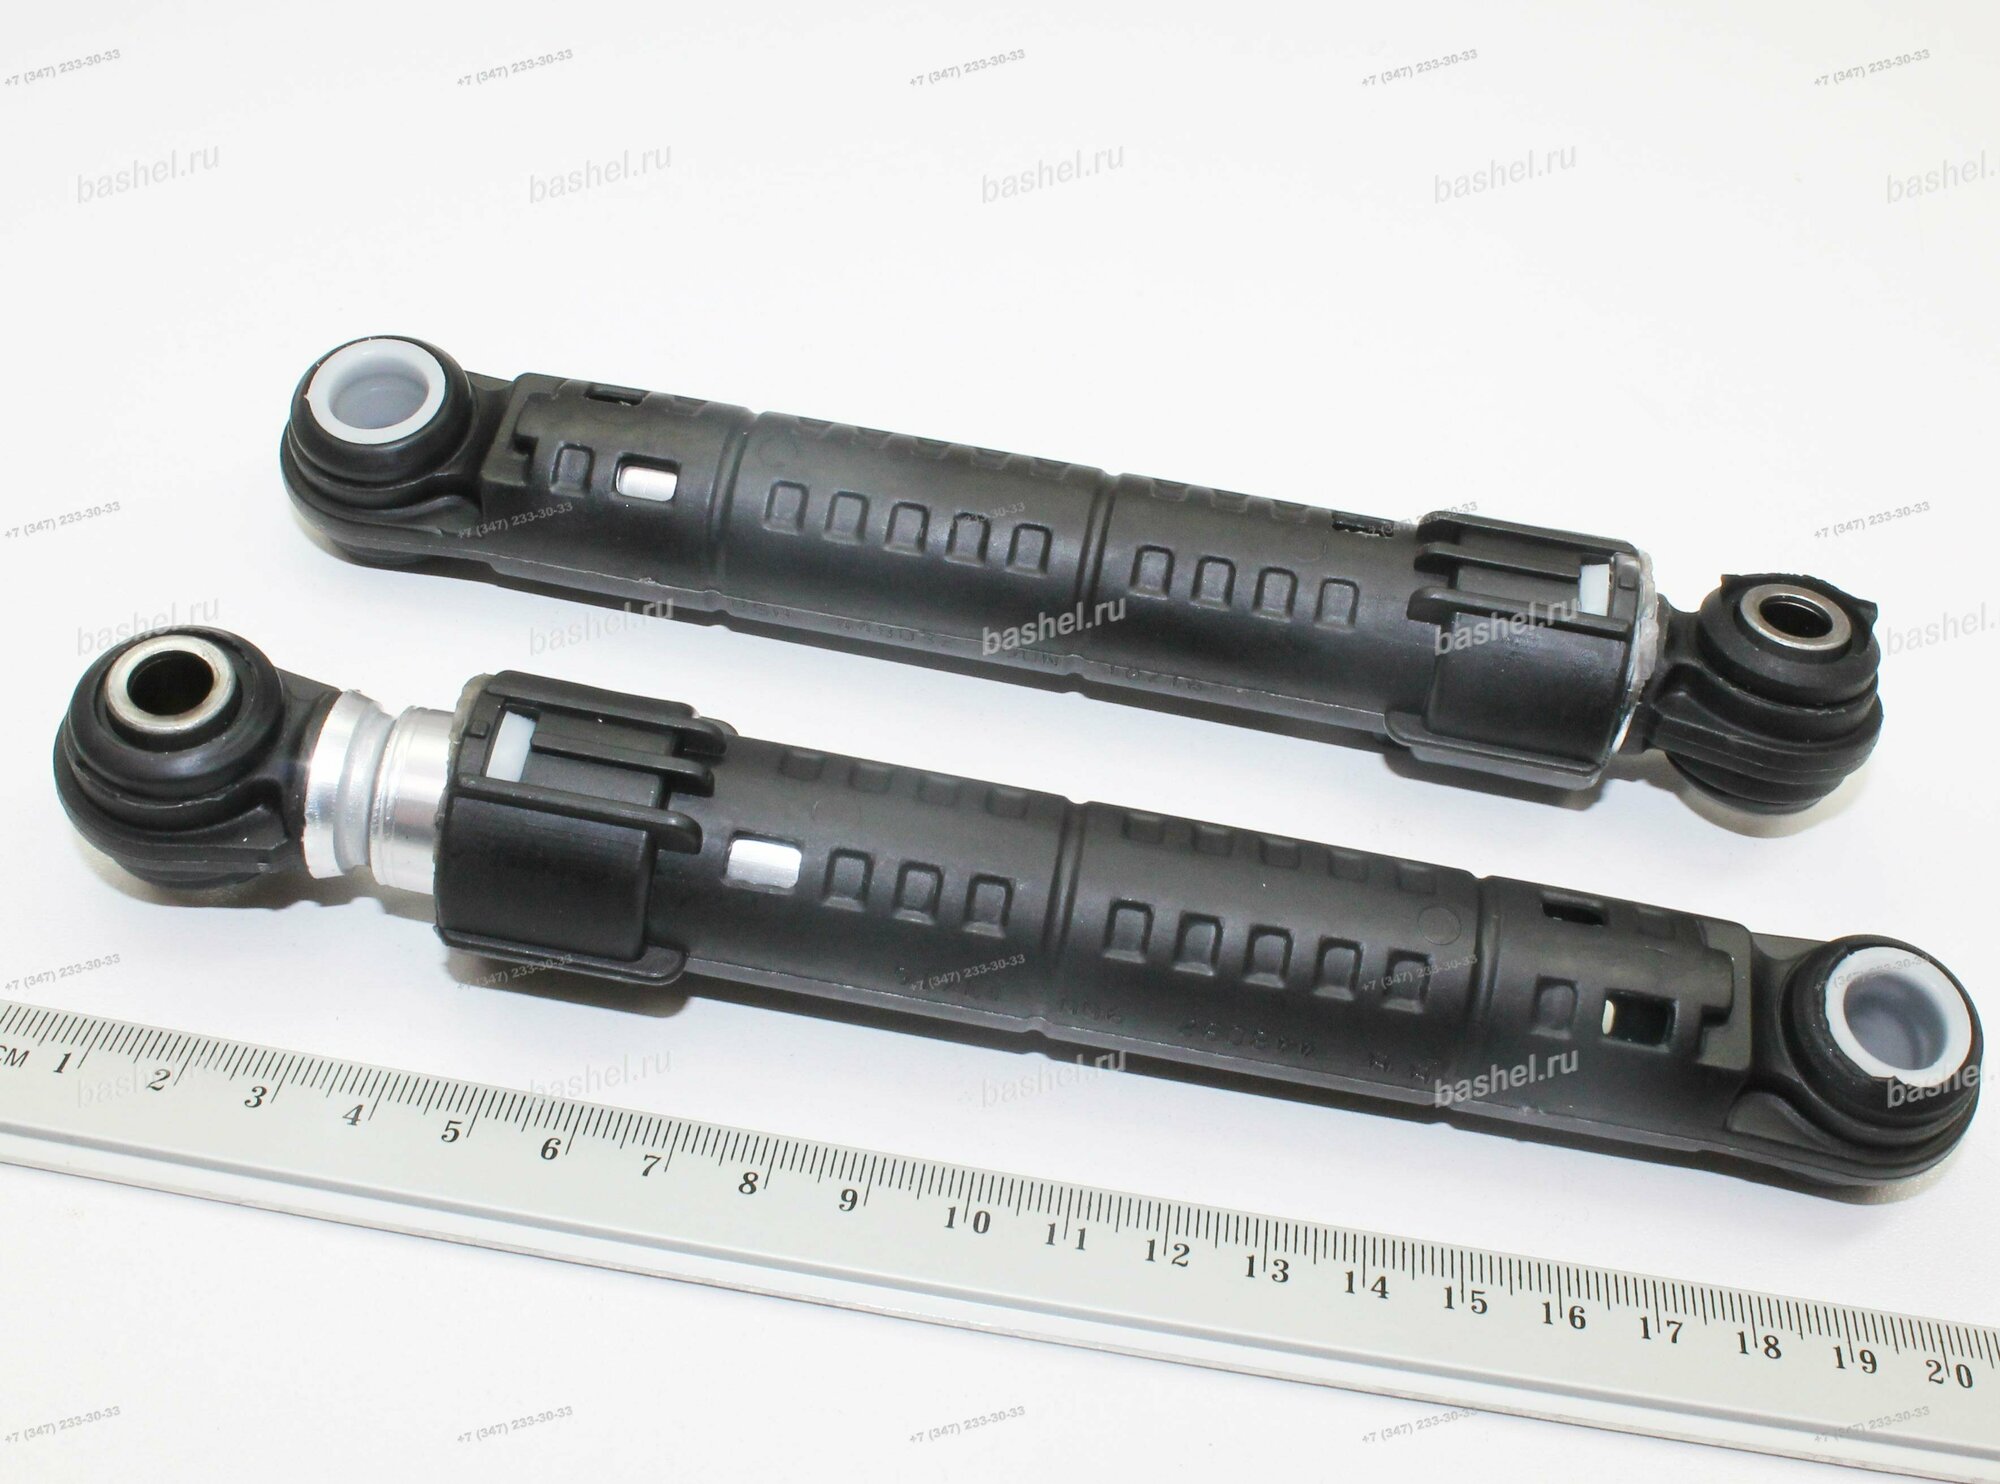 Амортизатор СМА 90N Bosch 448032 (SAR004BO) (комплект 2шт.)